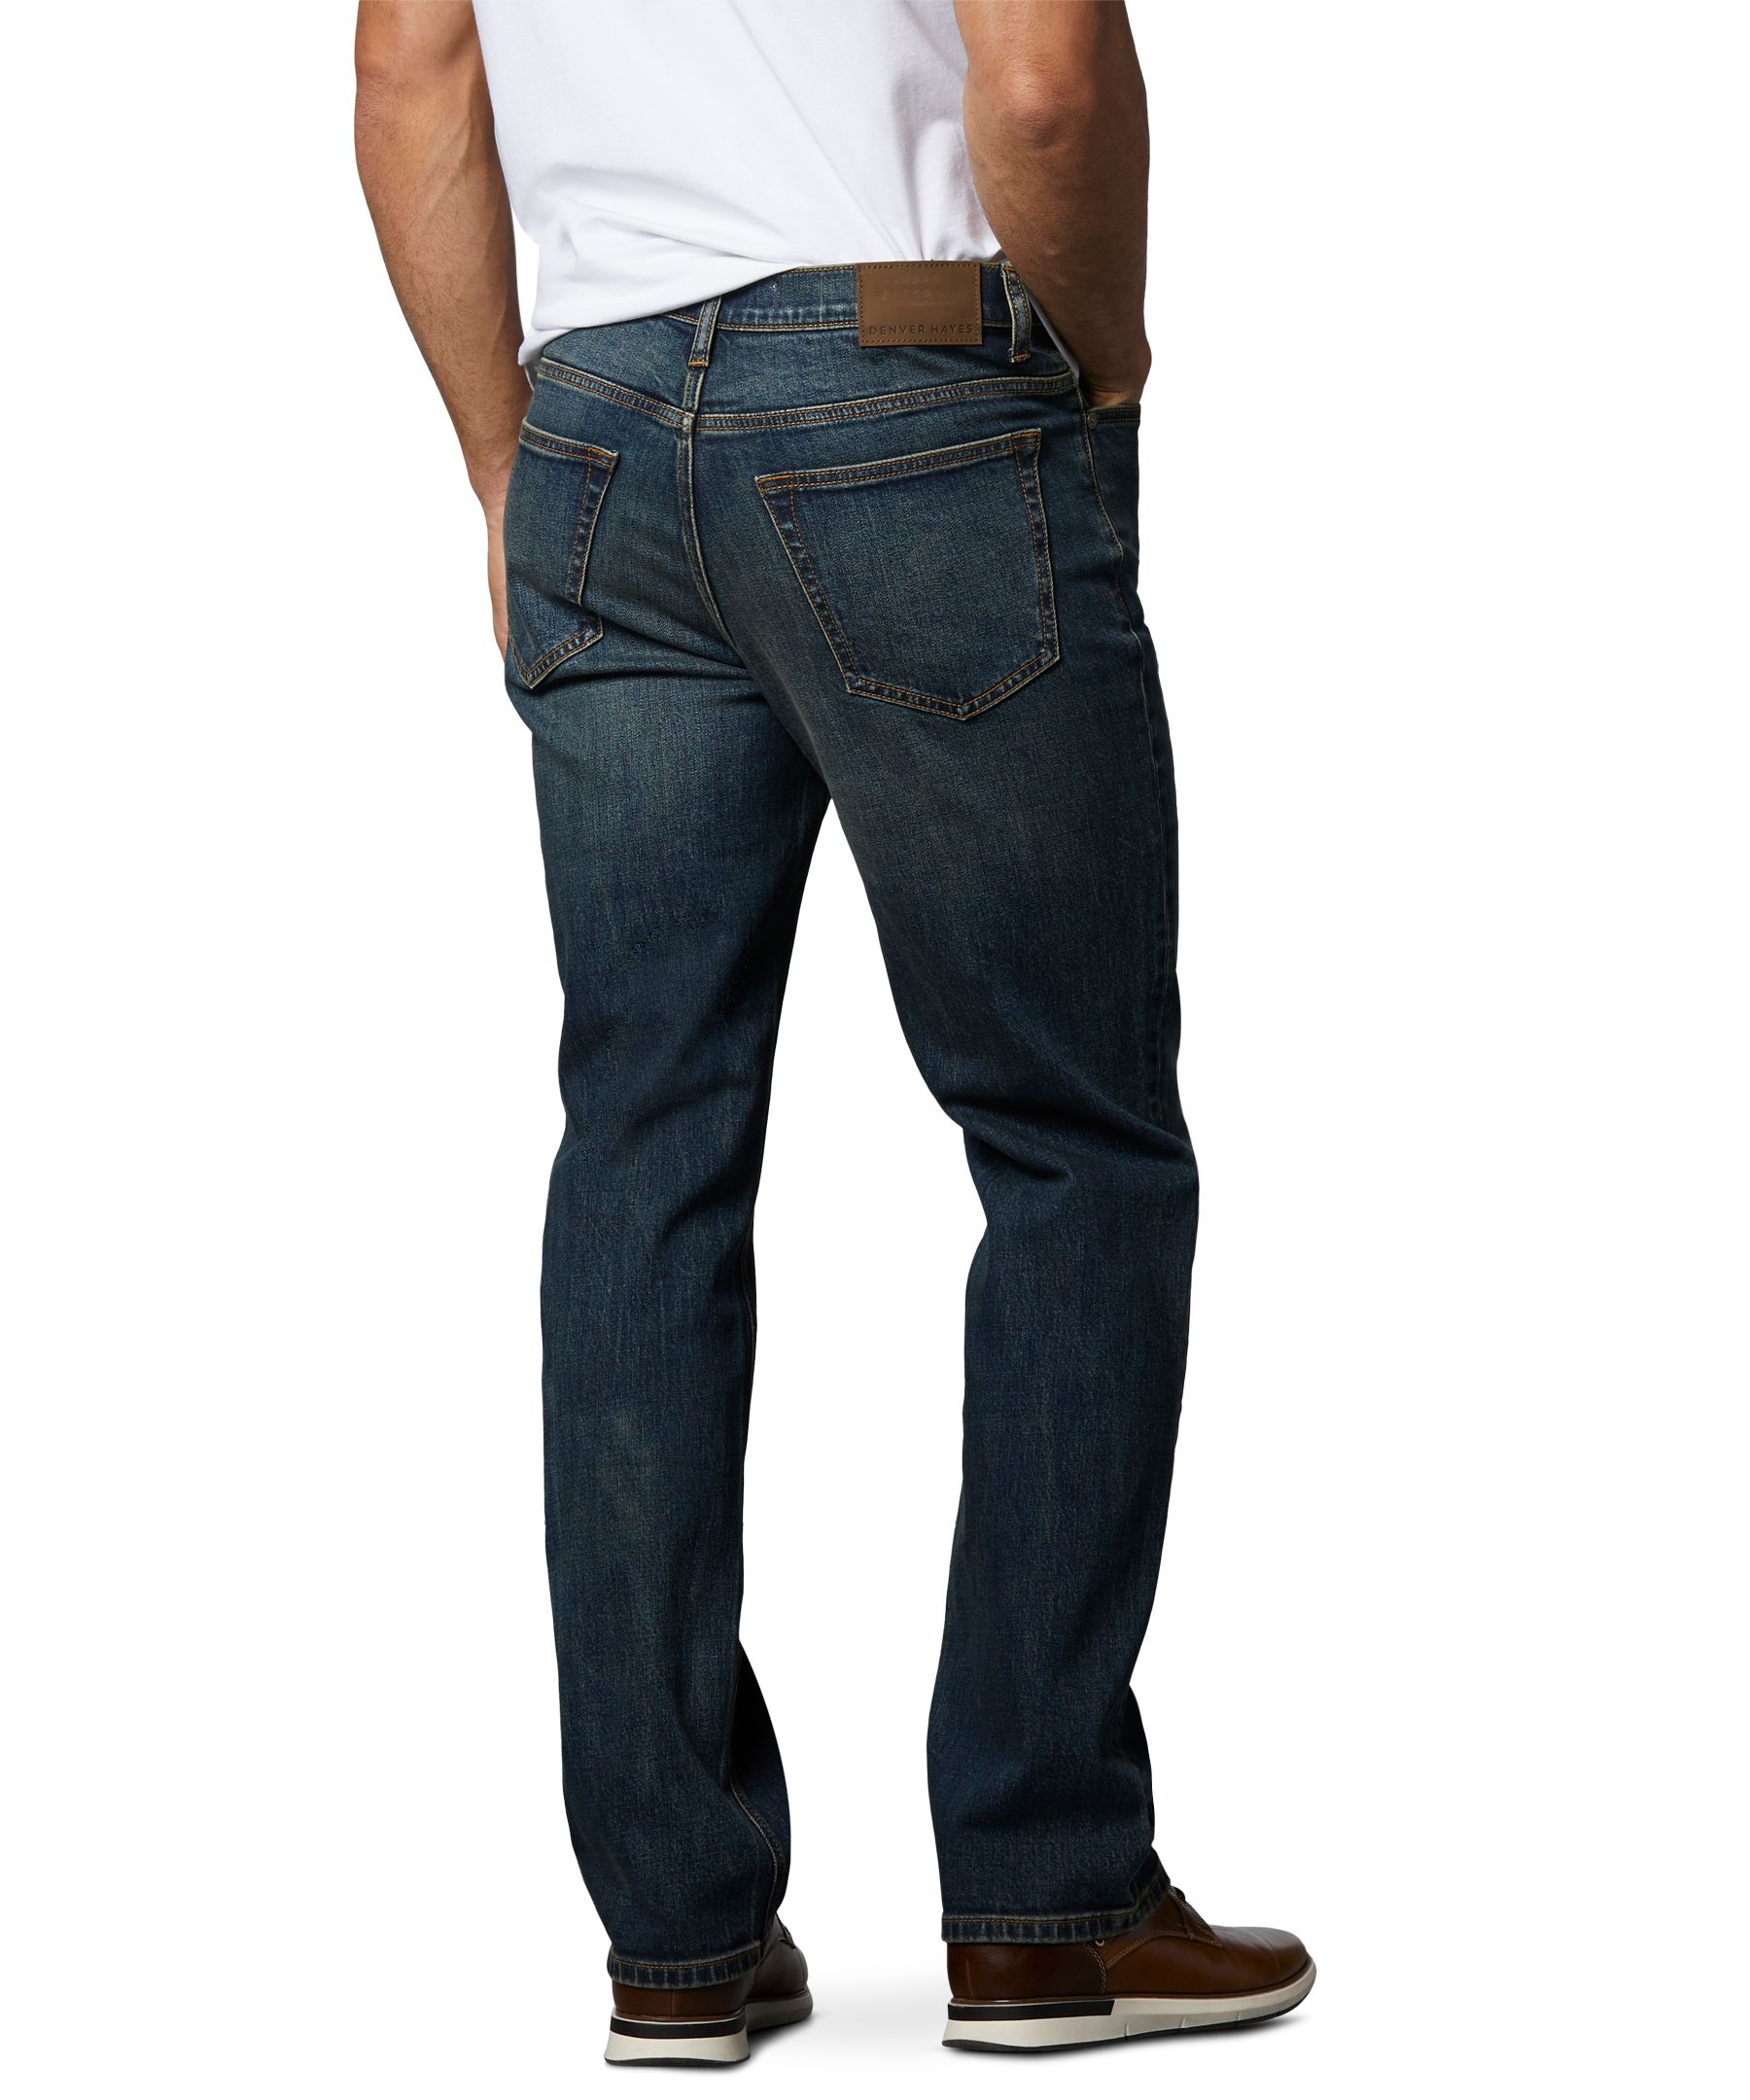 Denver Hayes Navy Twill Cotton Modal Slim Cut Pants NWT - Size 18